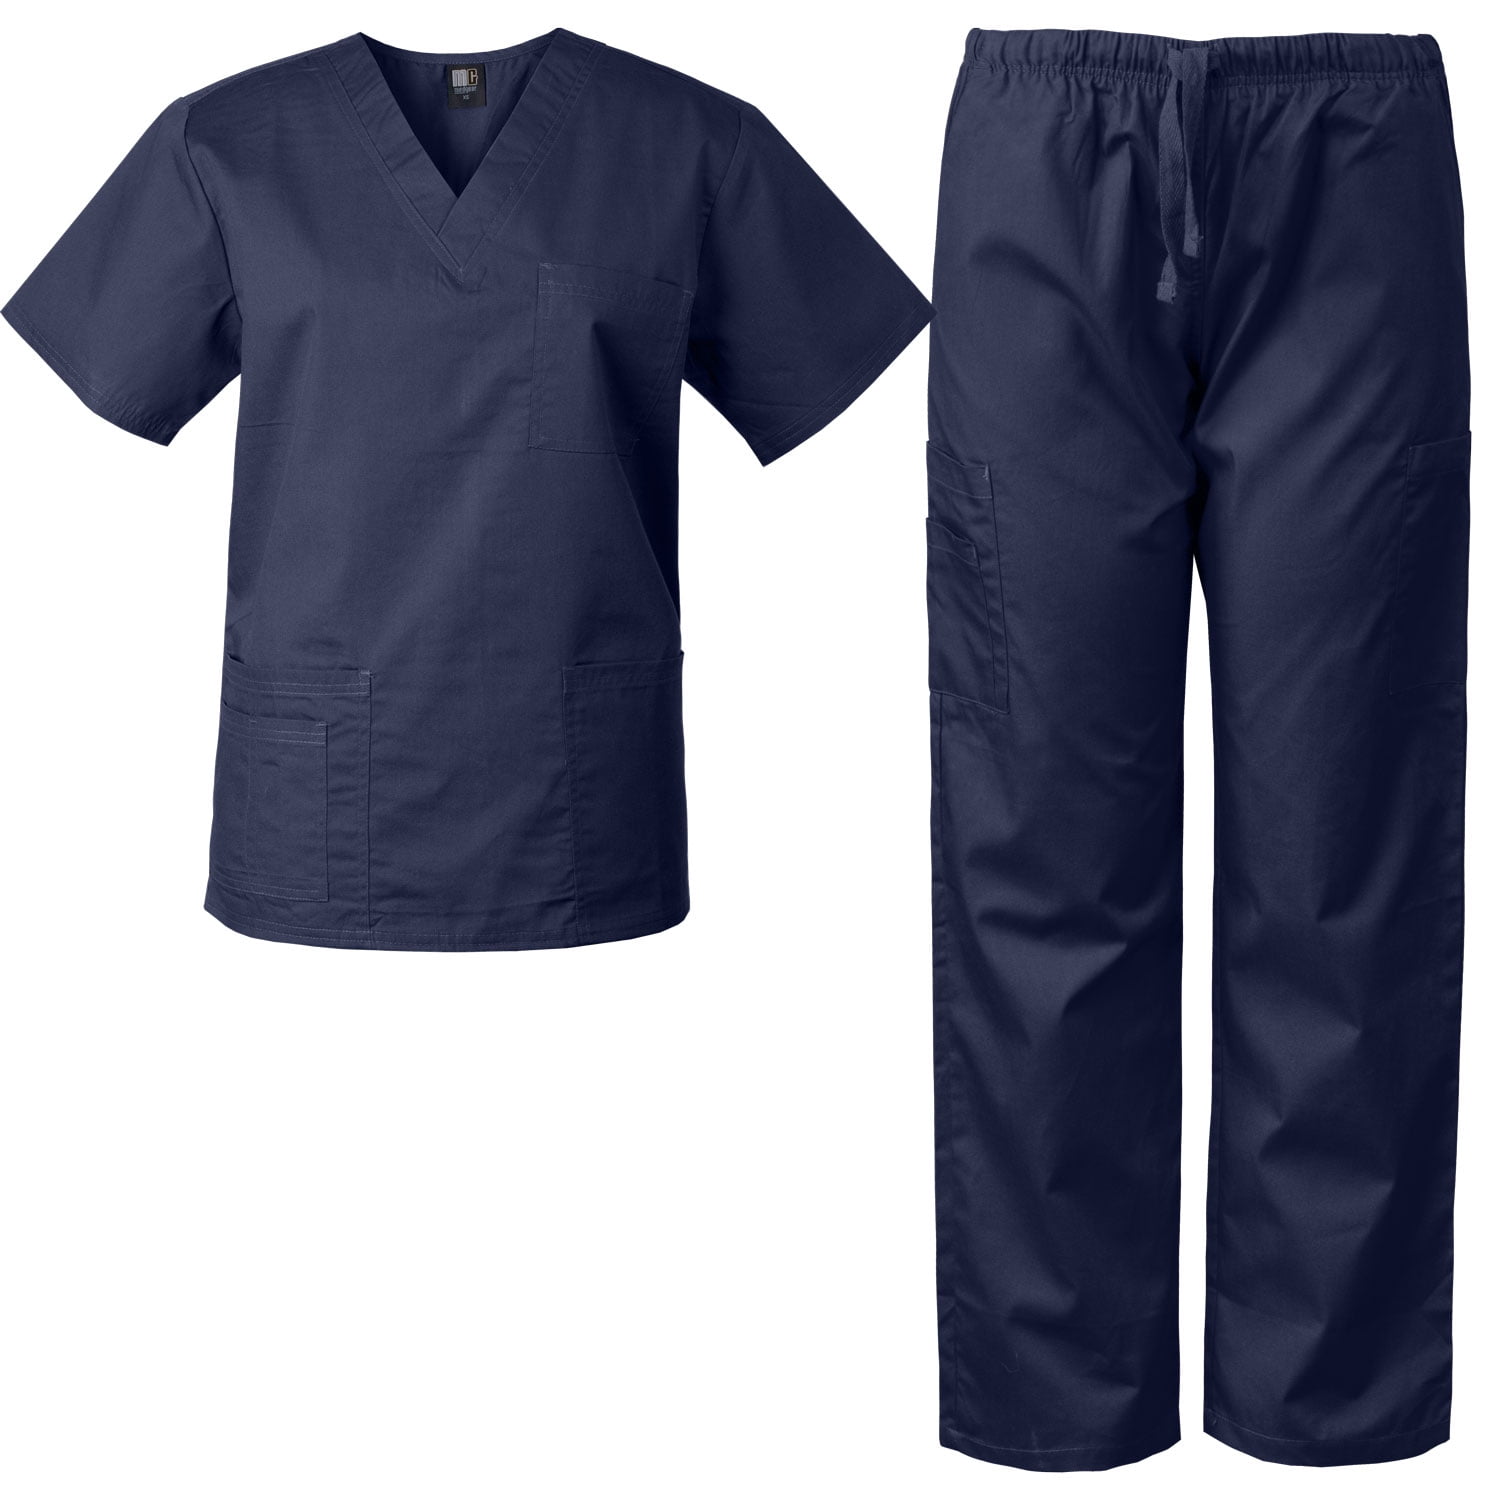 Medgear Scrubs for Men and Women Scrubs Set Medical Uniform, Navy, 4X-Large  